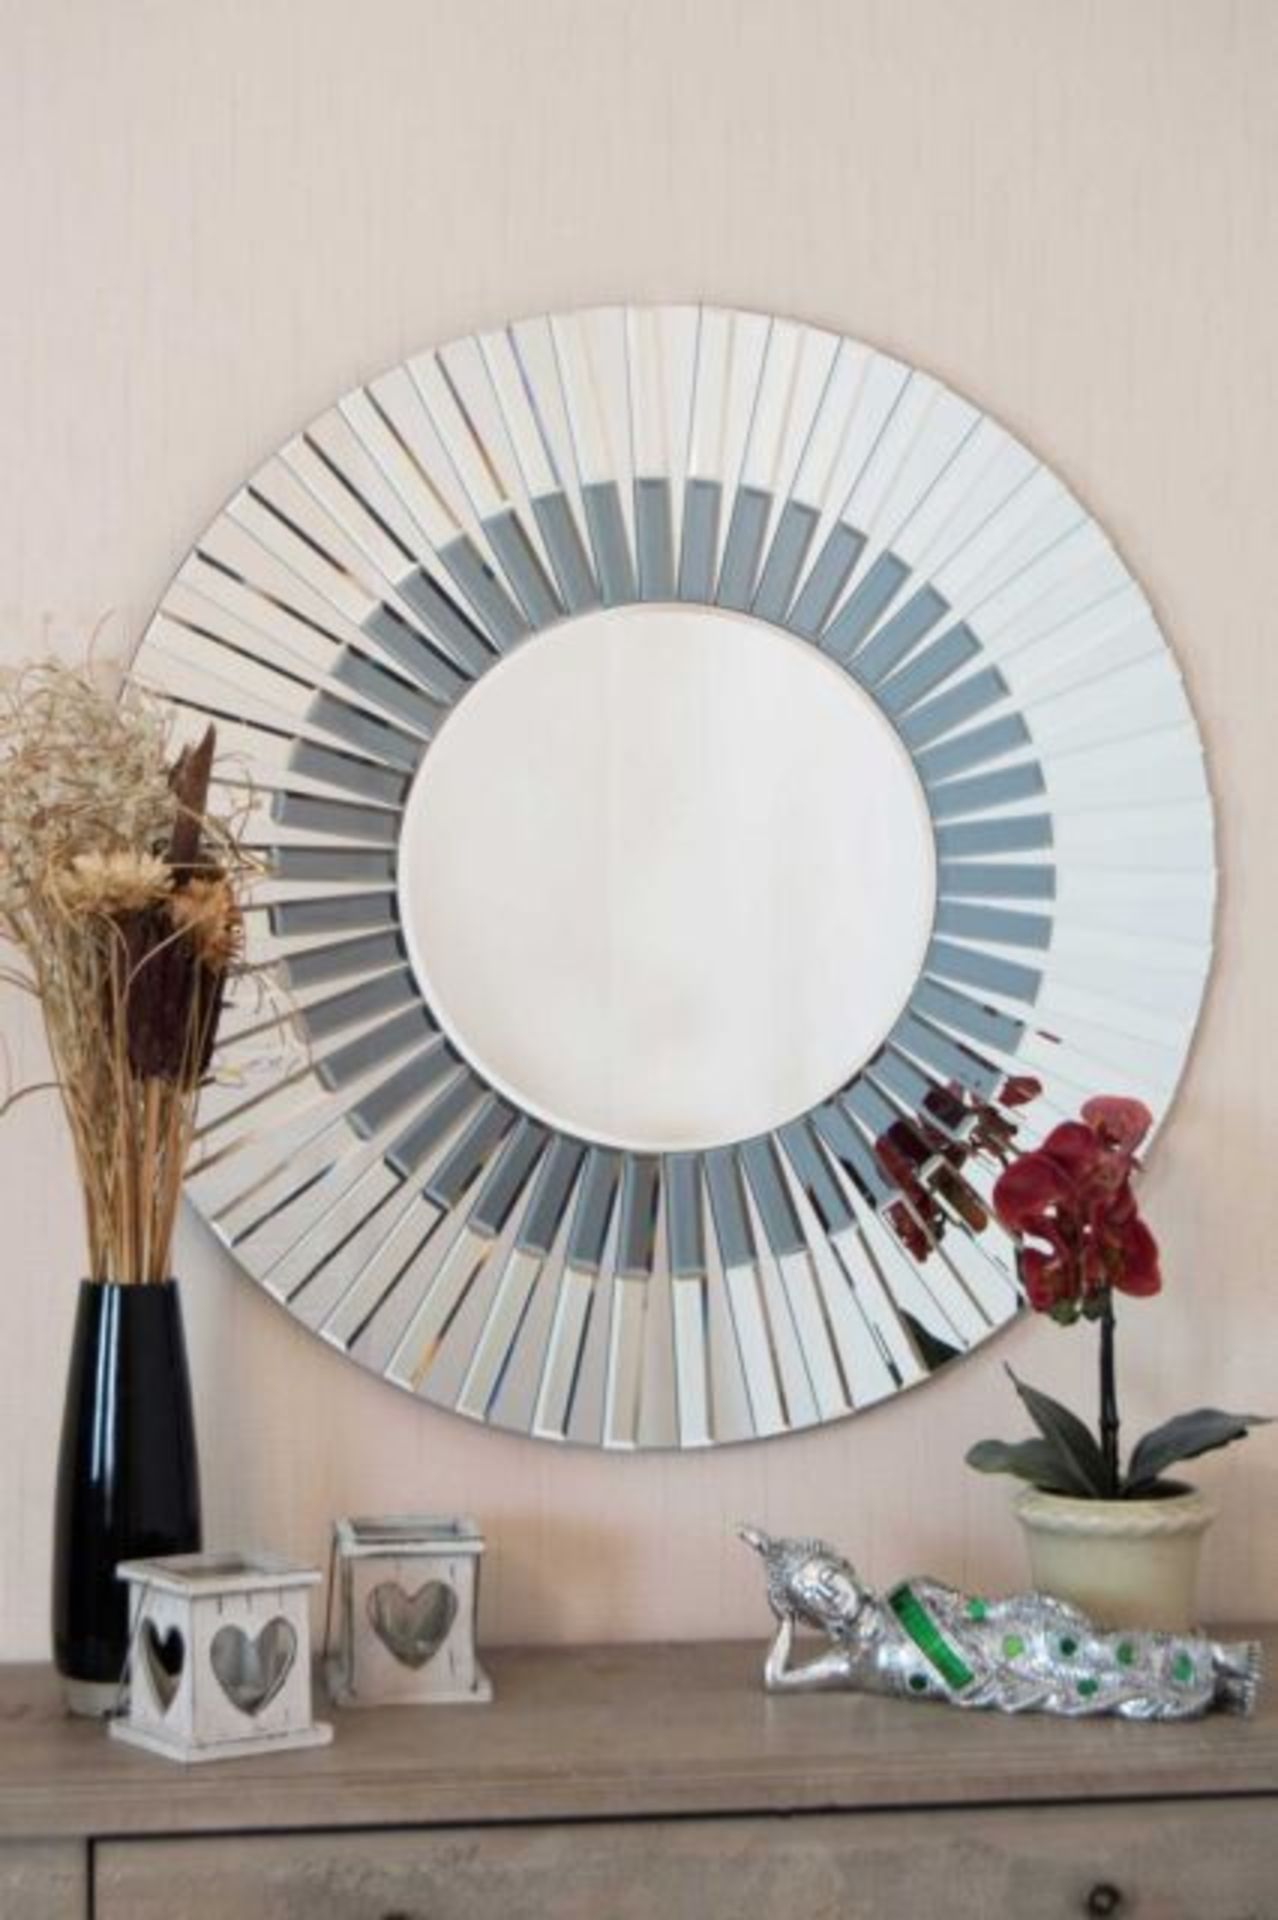 Morello Mirror 80cm The Morello Round Venetian Modernunique Modern Starburst Design Wall Mirror The